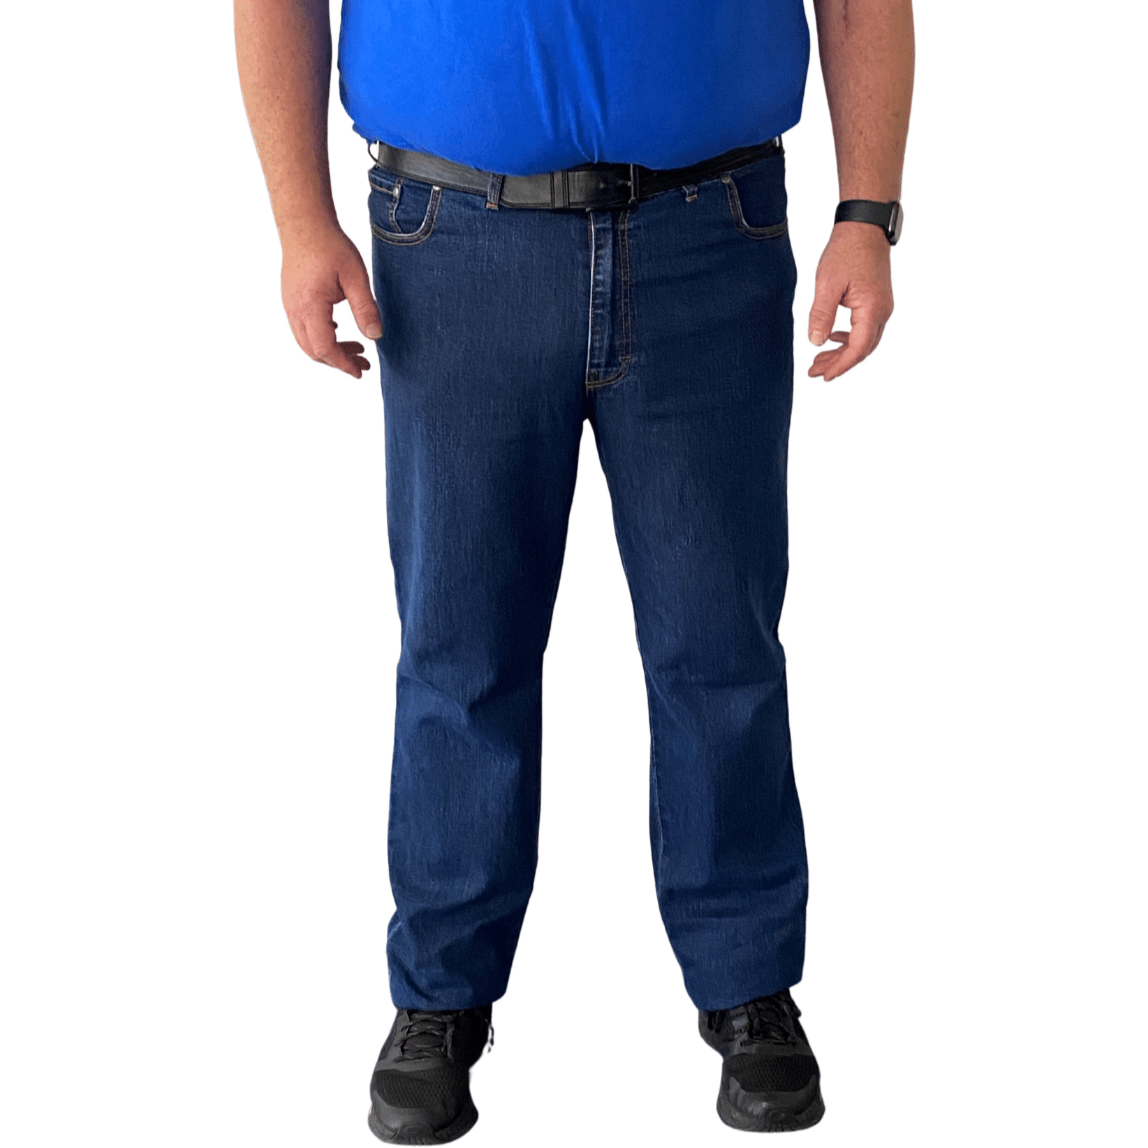 Maxitalia Blue Stretch Denim 5 Pocket Jean